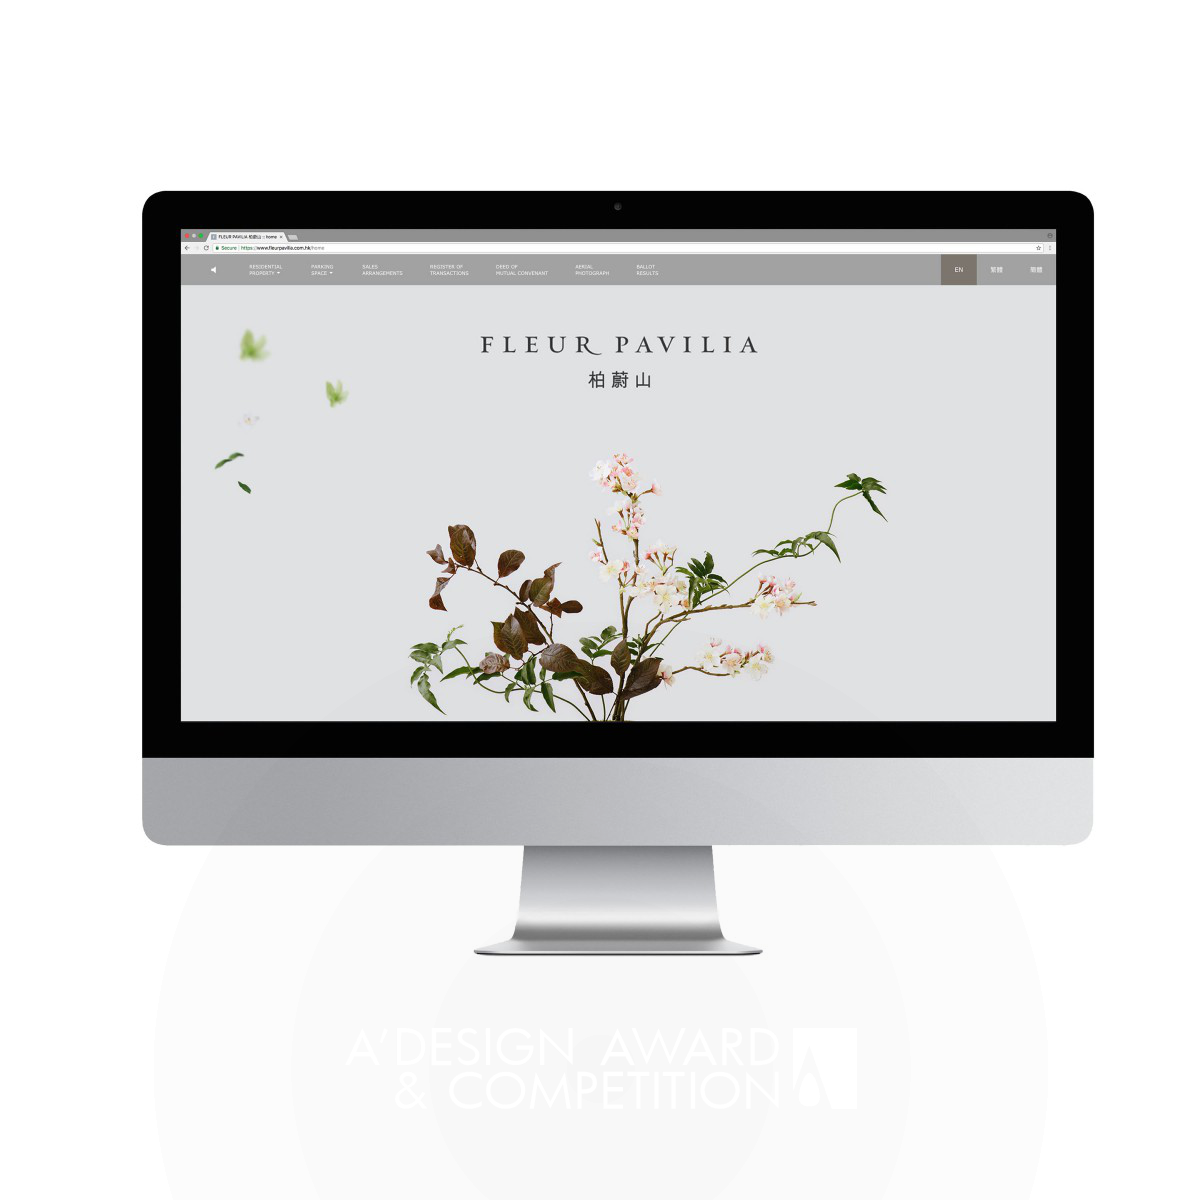 Fleur Pavilia: A Blend of Art and Interactive Design